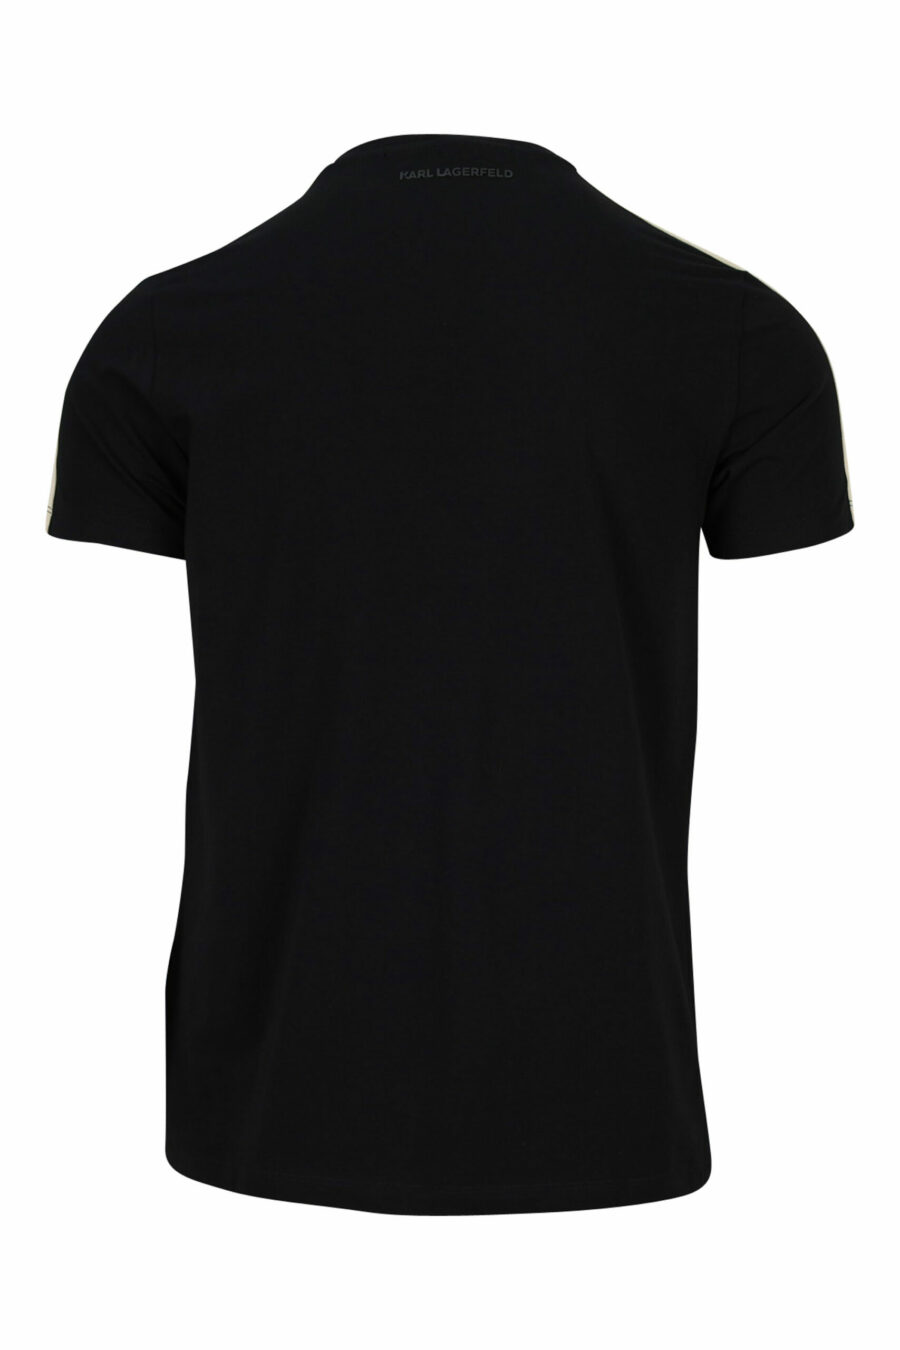 Camiseta negra con minilogo y franjas beige laterales - 4062226401746 2 scaled